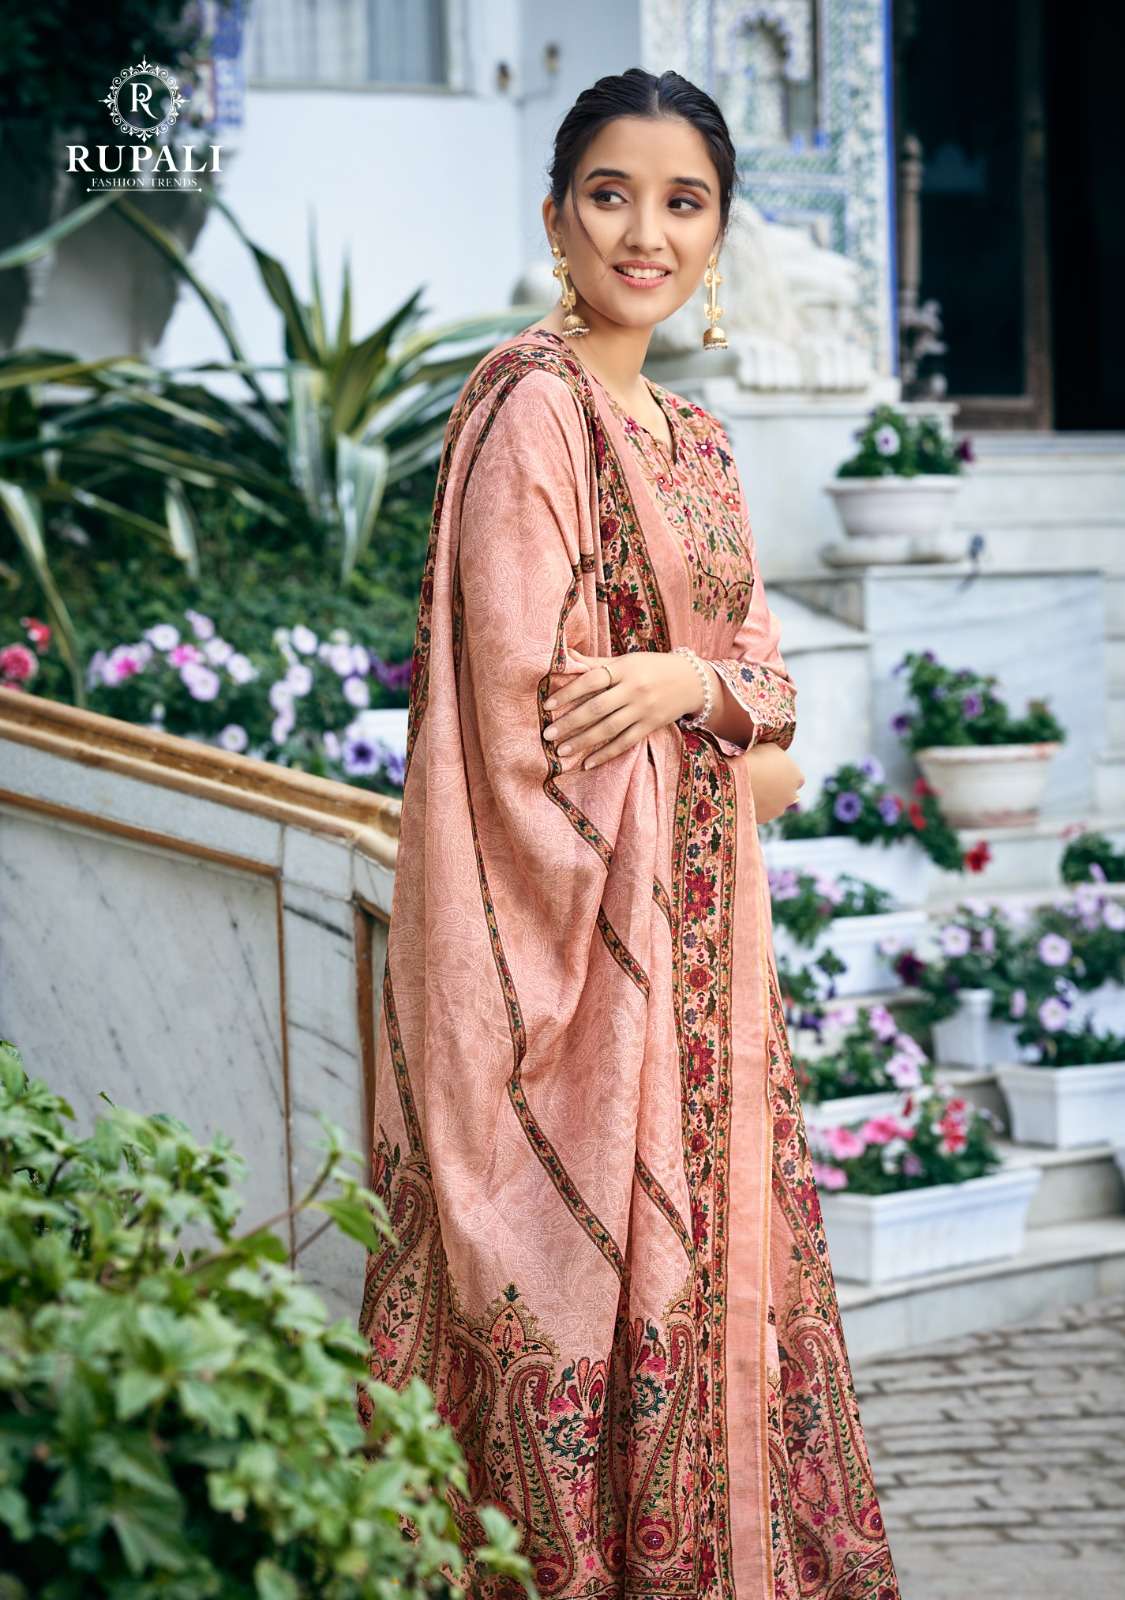 rupali fashion mega 3301-3306 series fancy designer salwar kameez catalogue wholesaler surat 